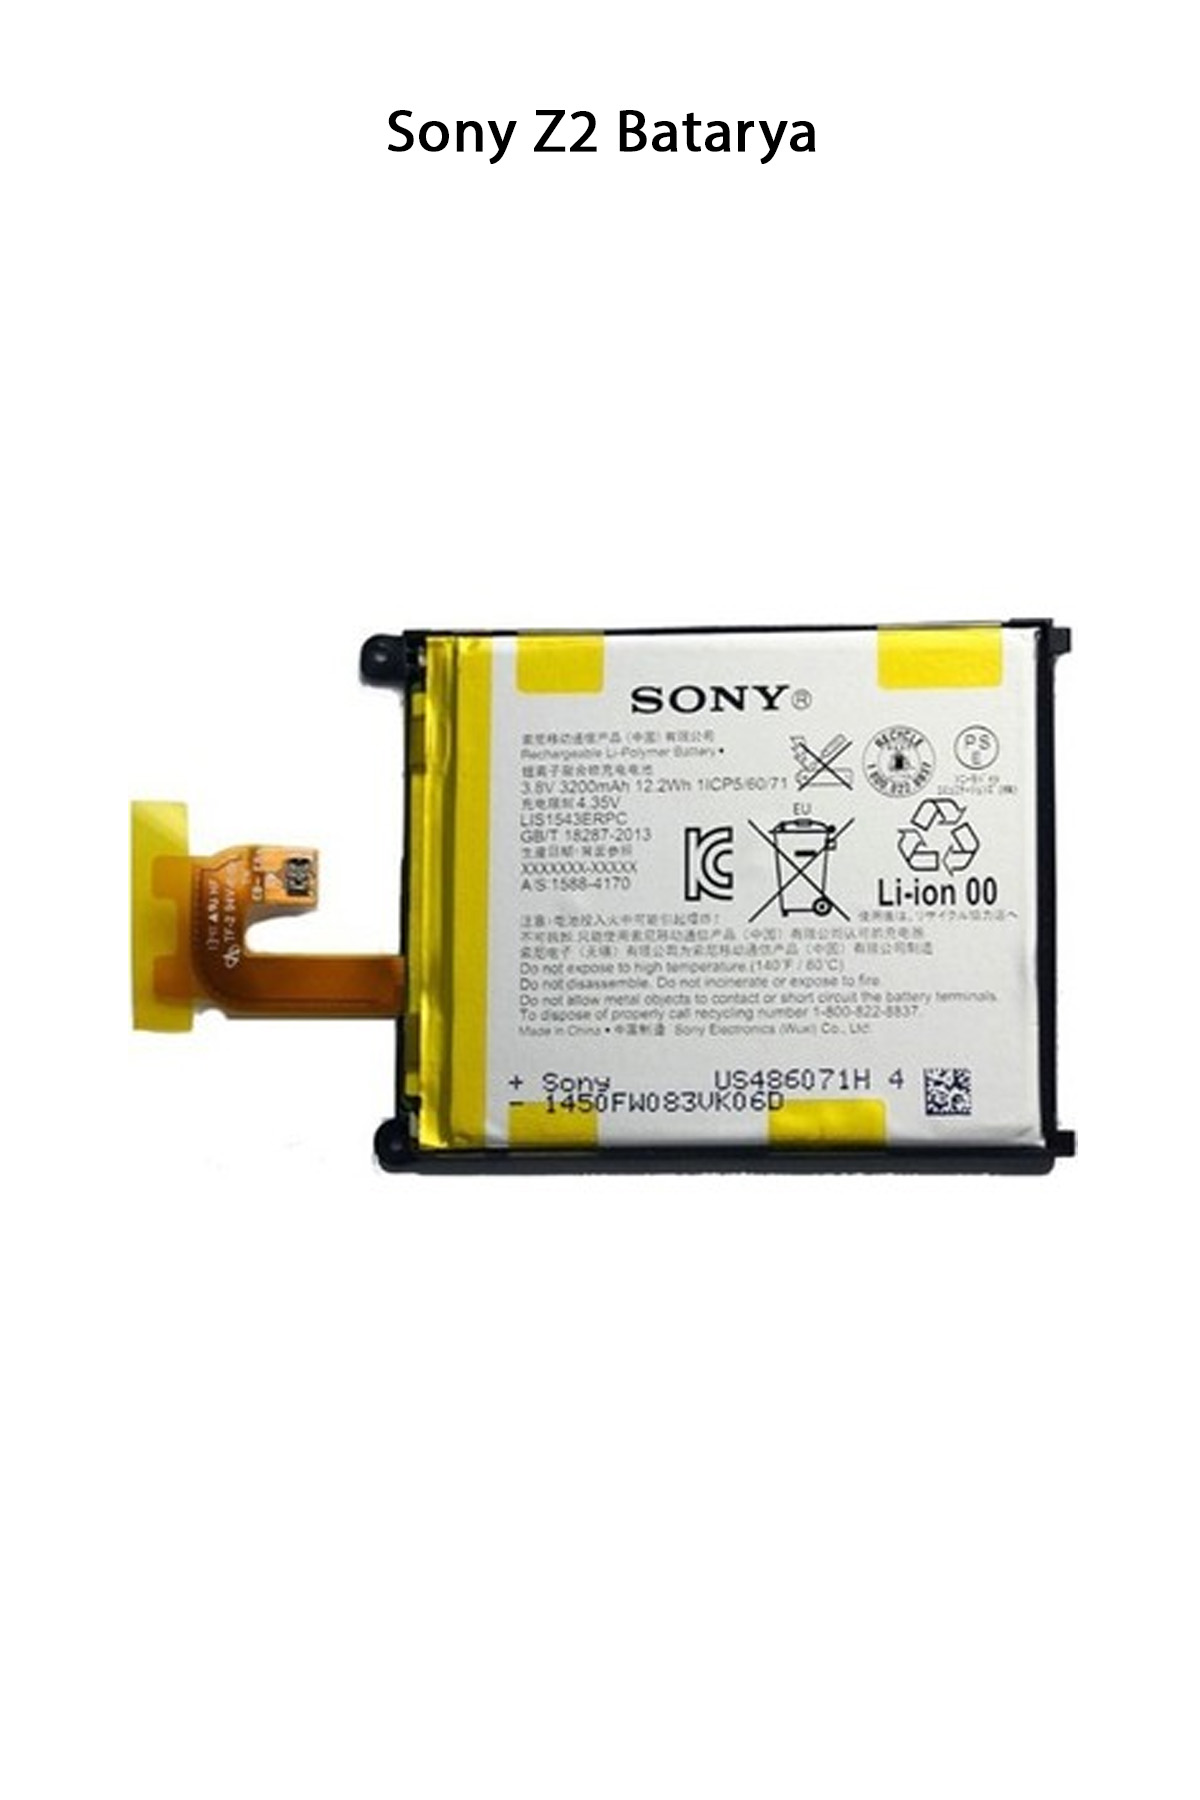 Sony Xperia Z2 Telefonlarla Uyumlu Batarya 3200 mAh